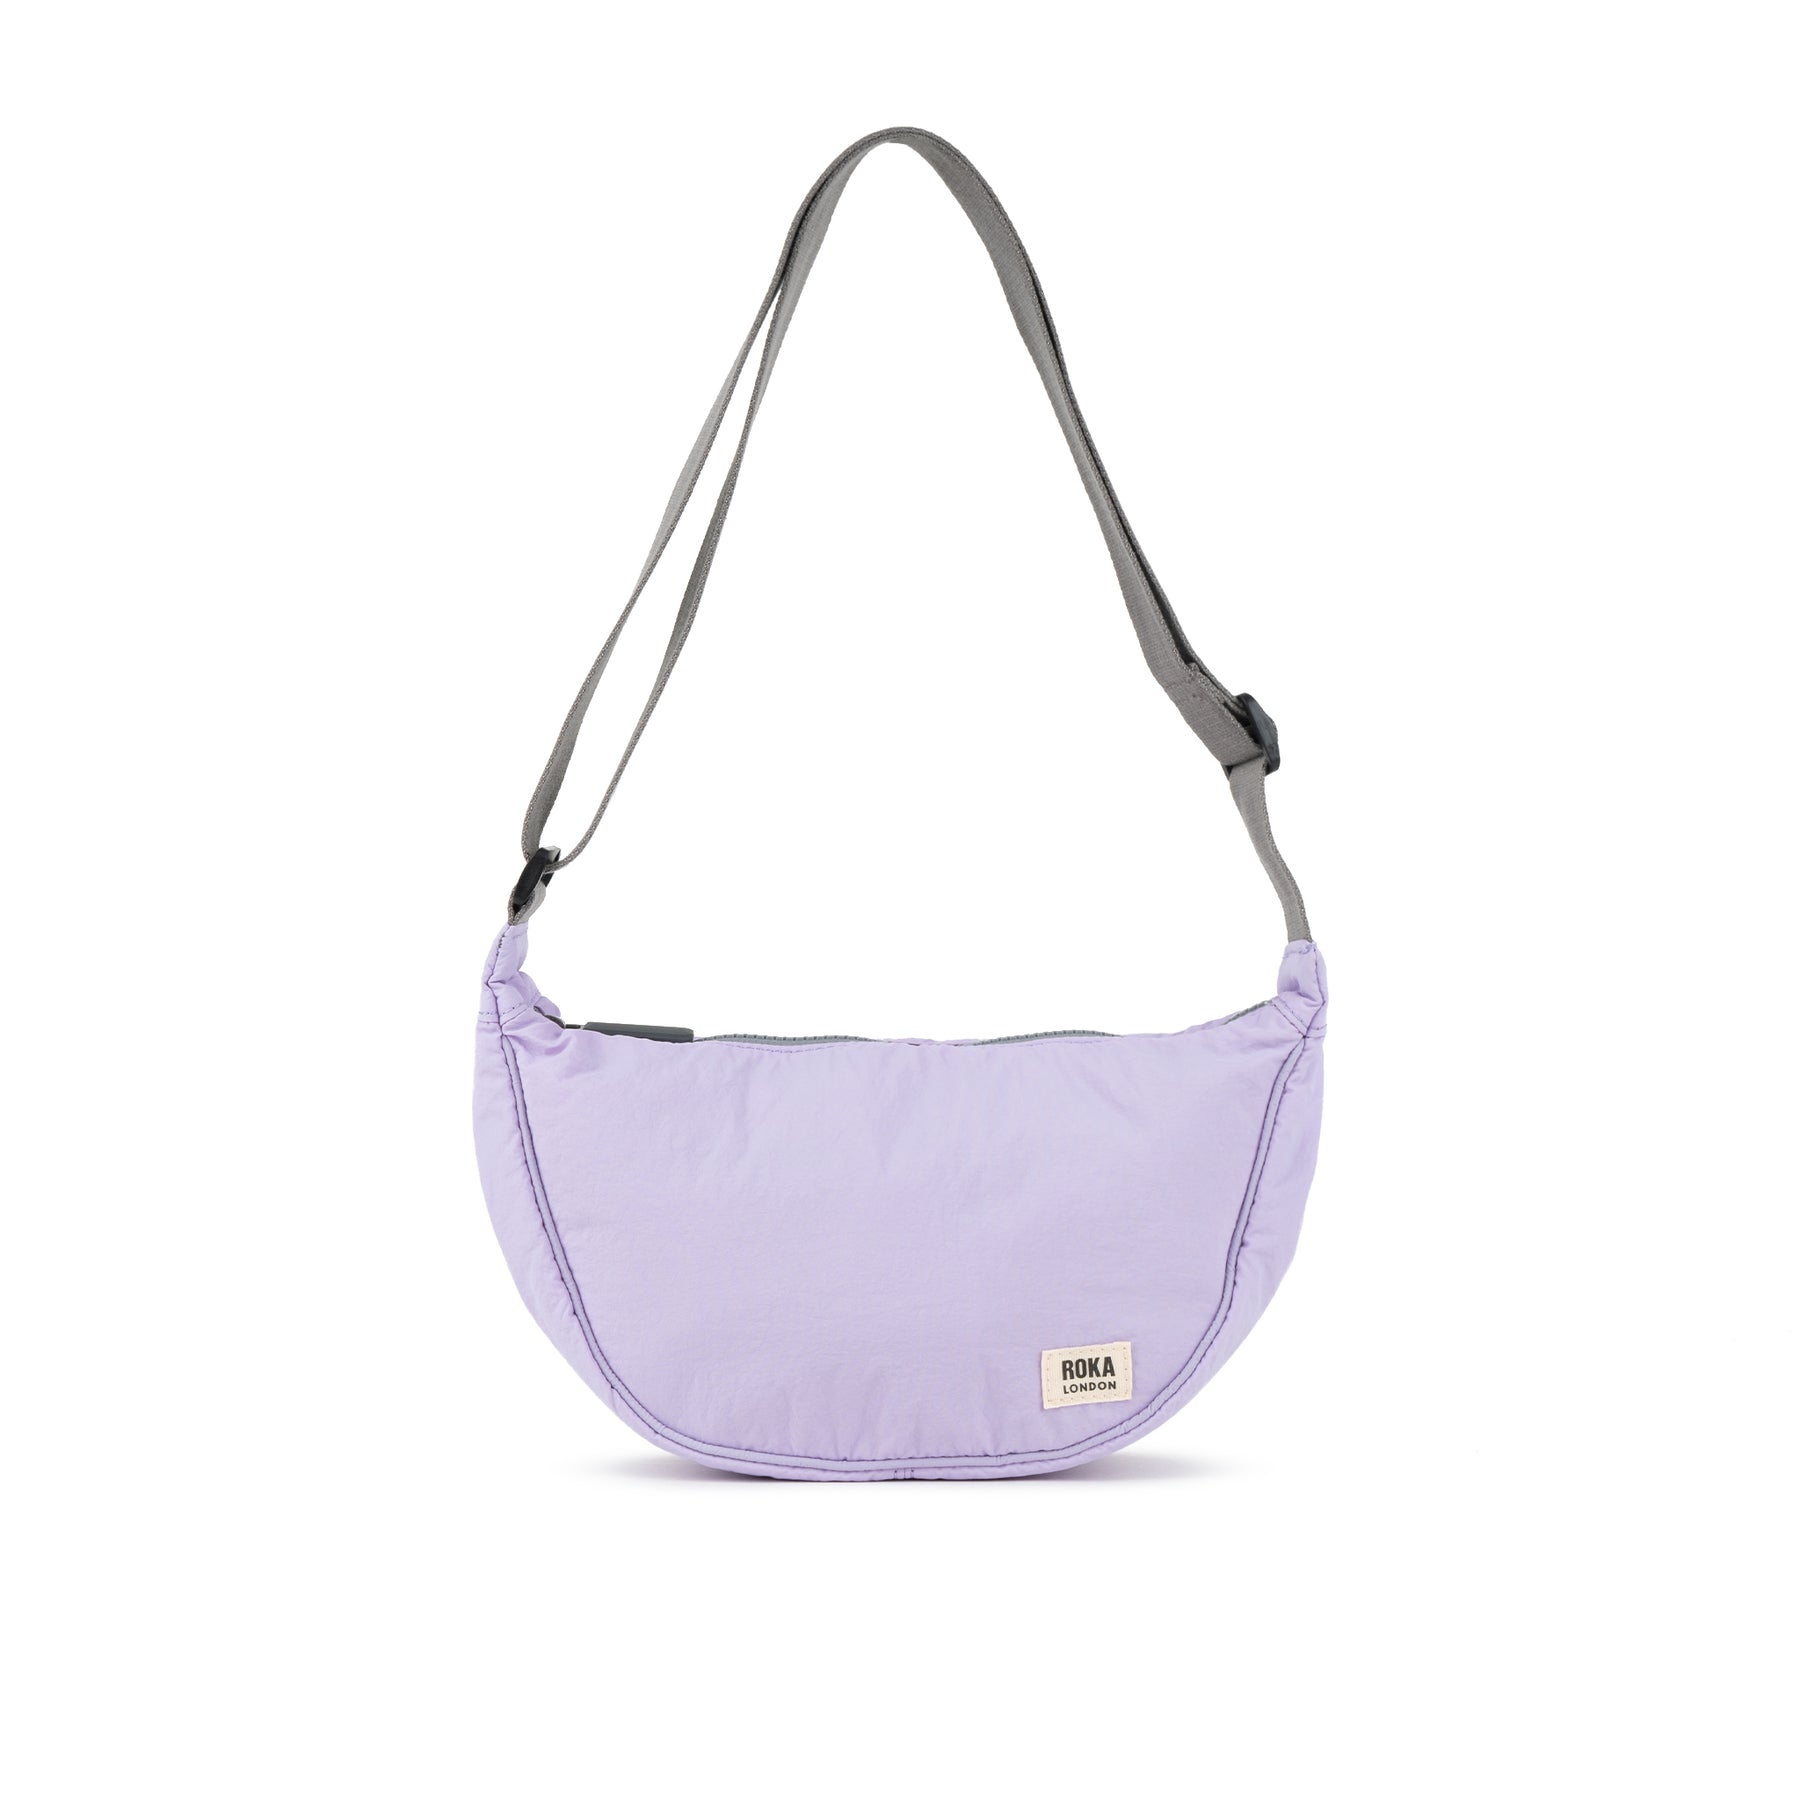 Lavender Farringdon Bag